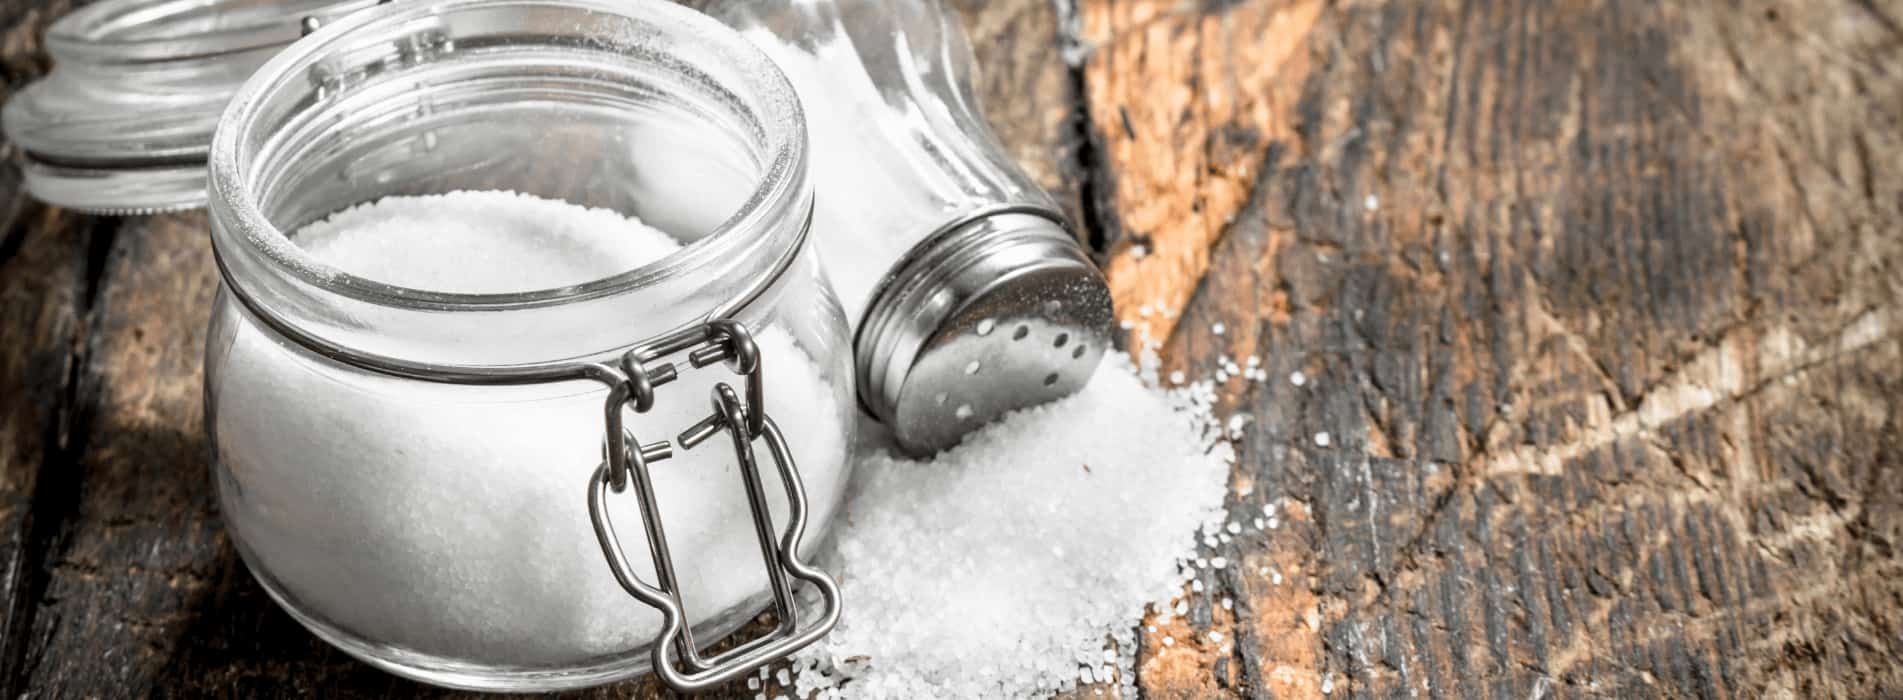 Does salt intake affect weight loss